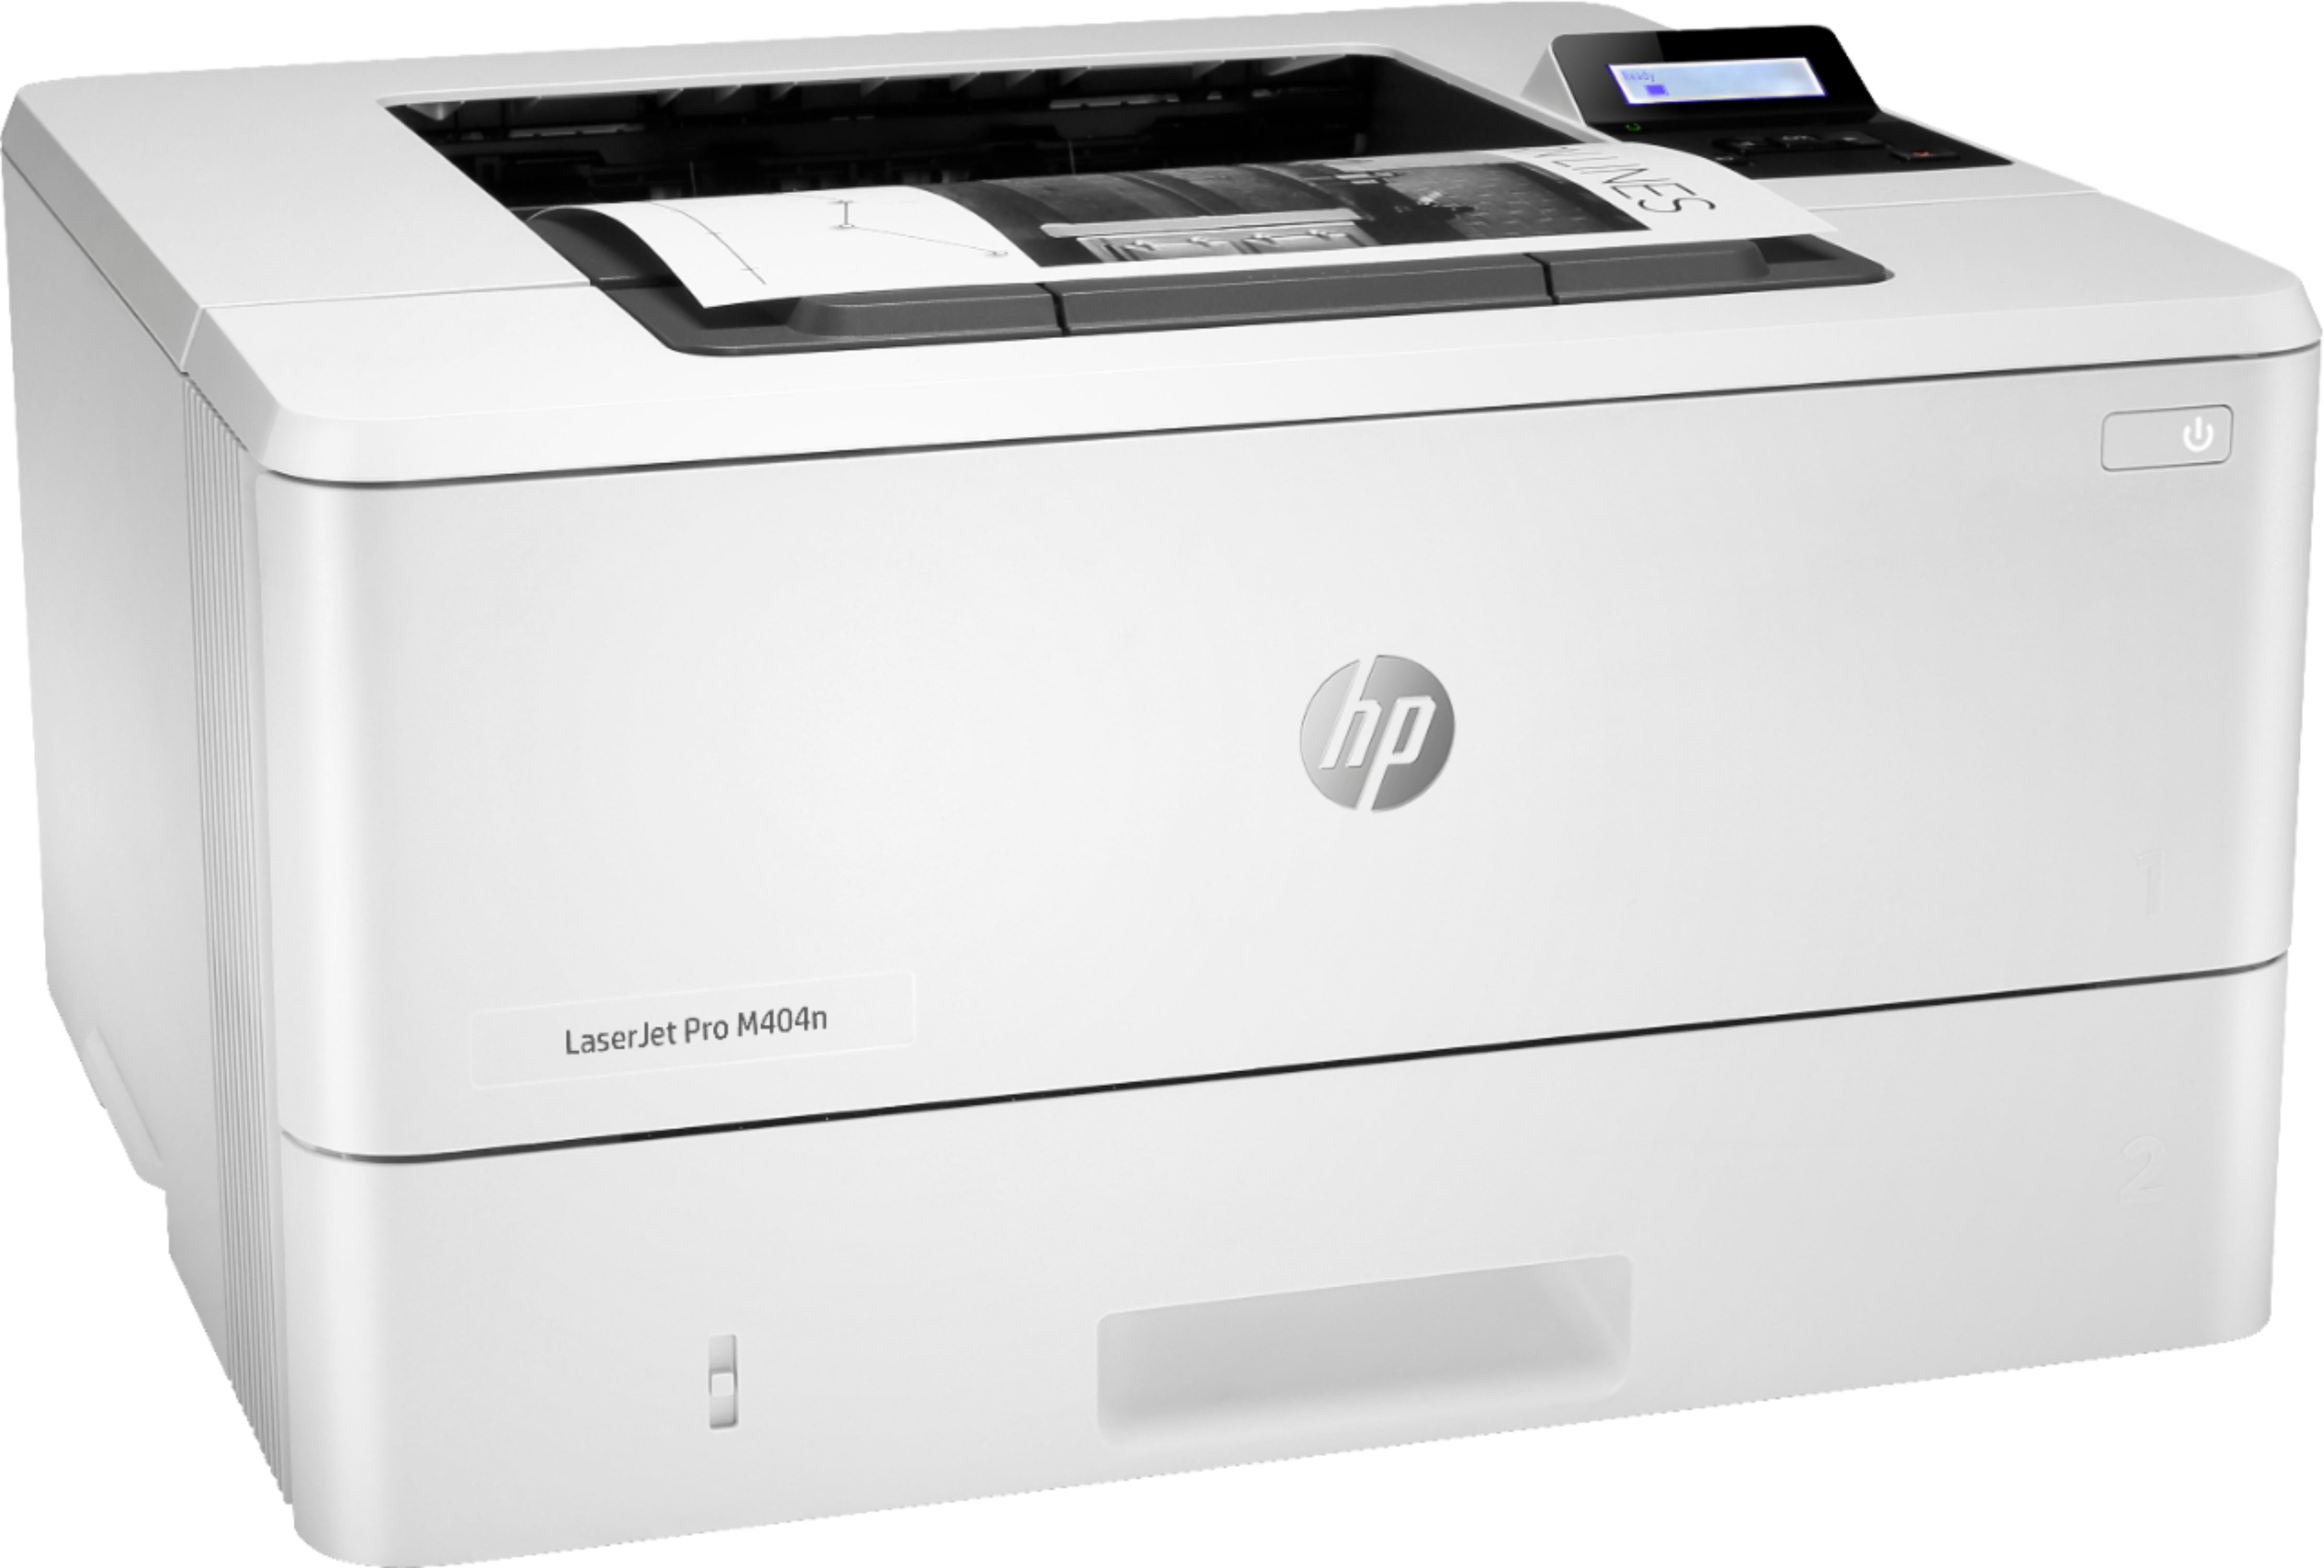 Angle View: HP - LaserJet Pro M404n Black-and-White Laser Printer - White